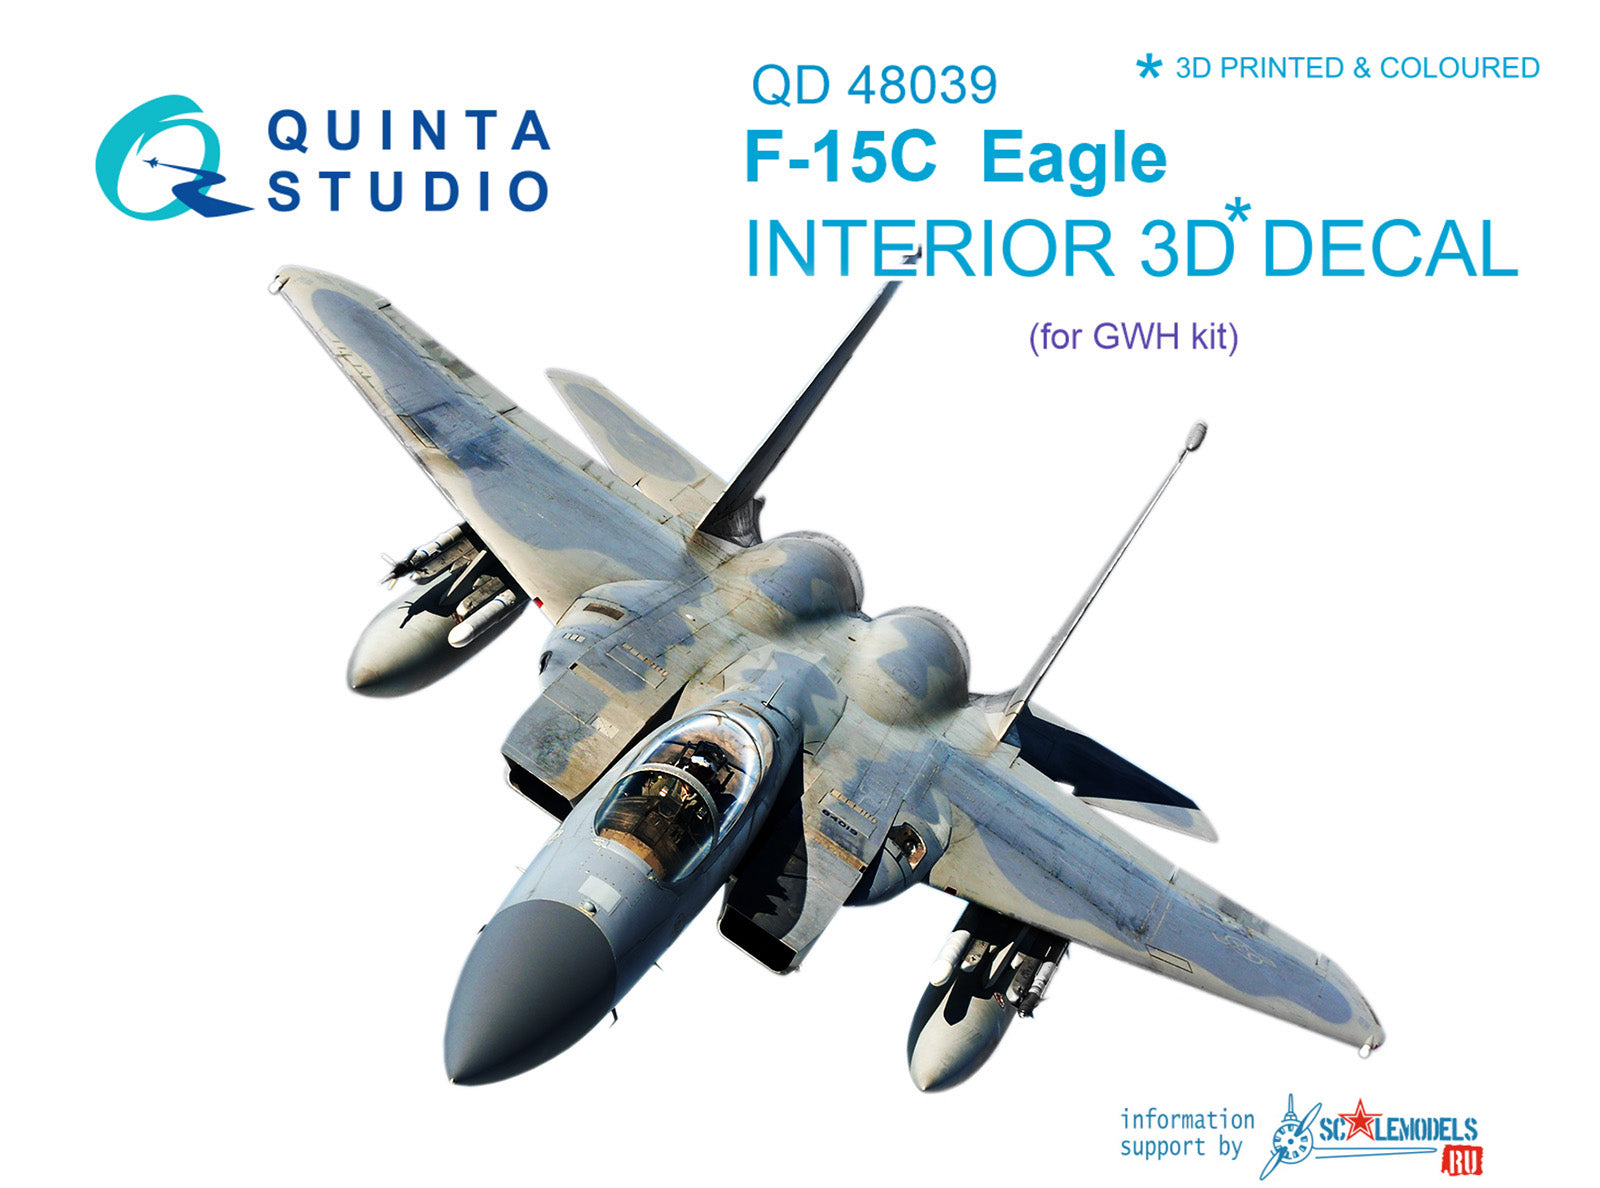 Quinta Studio - 1/48 F-15C - QD48039 for GWH kit